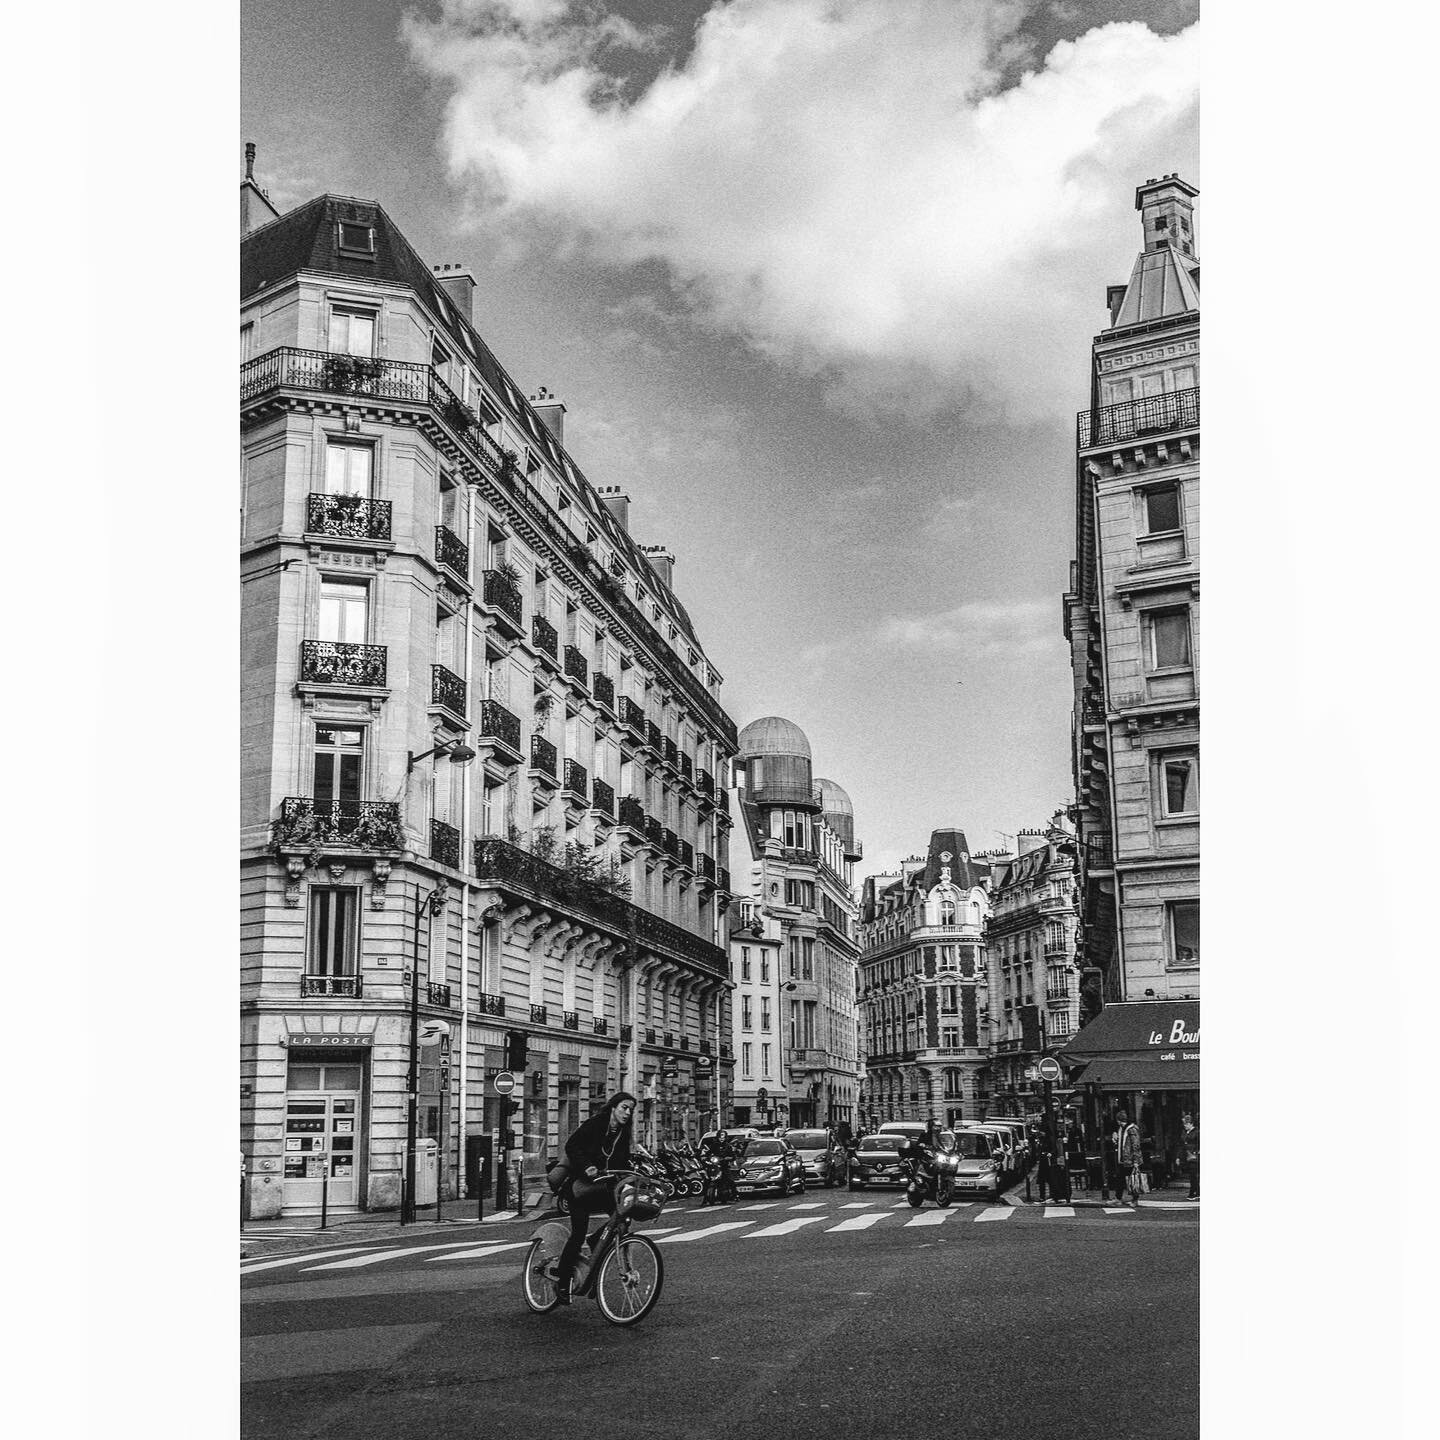 Paris streets 1
.
.
.

#street #magnumphotos #life_is_street #thinkverylittle #reframedmag #eyeshotmag #life_is_scene #capturestreets #photocinematica #minimalzine #bw #bnw #blackandwhite #bnw_demand #streetbw
#bnw_artstyle #paris #france